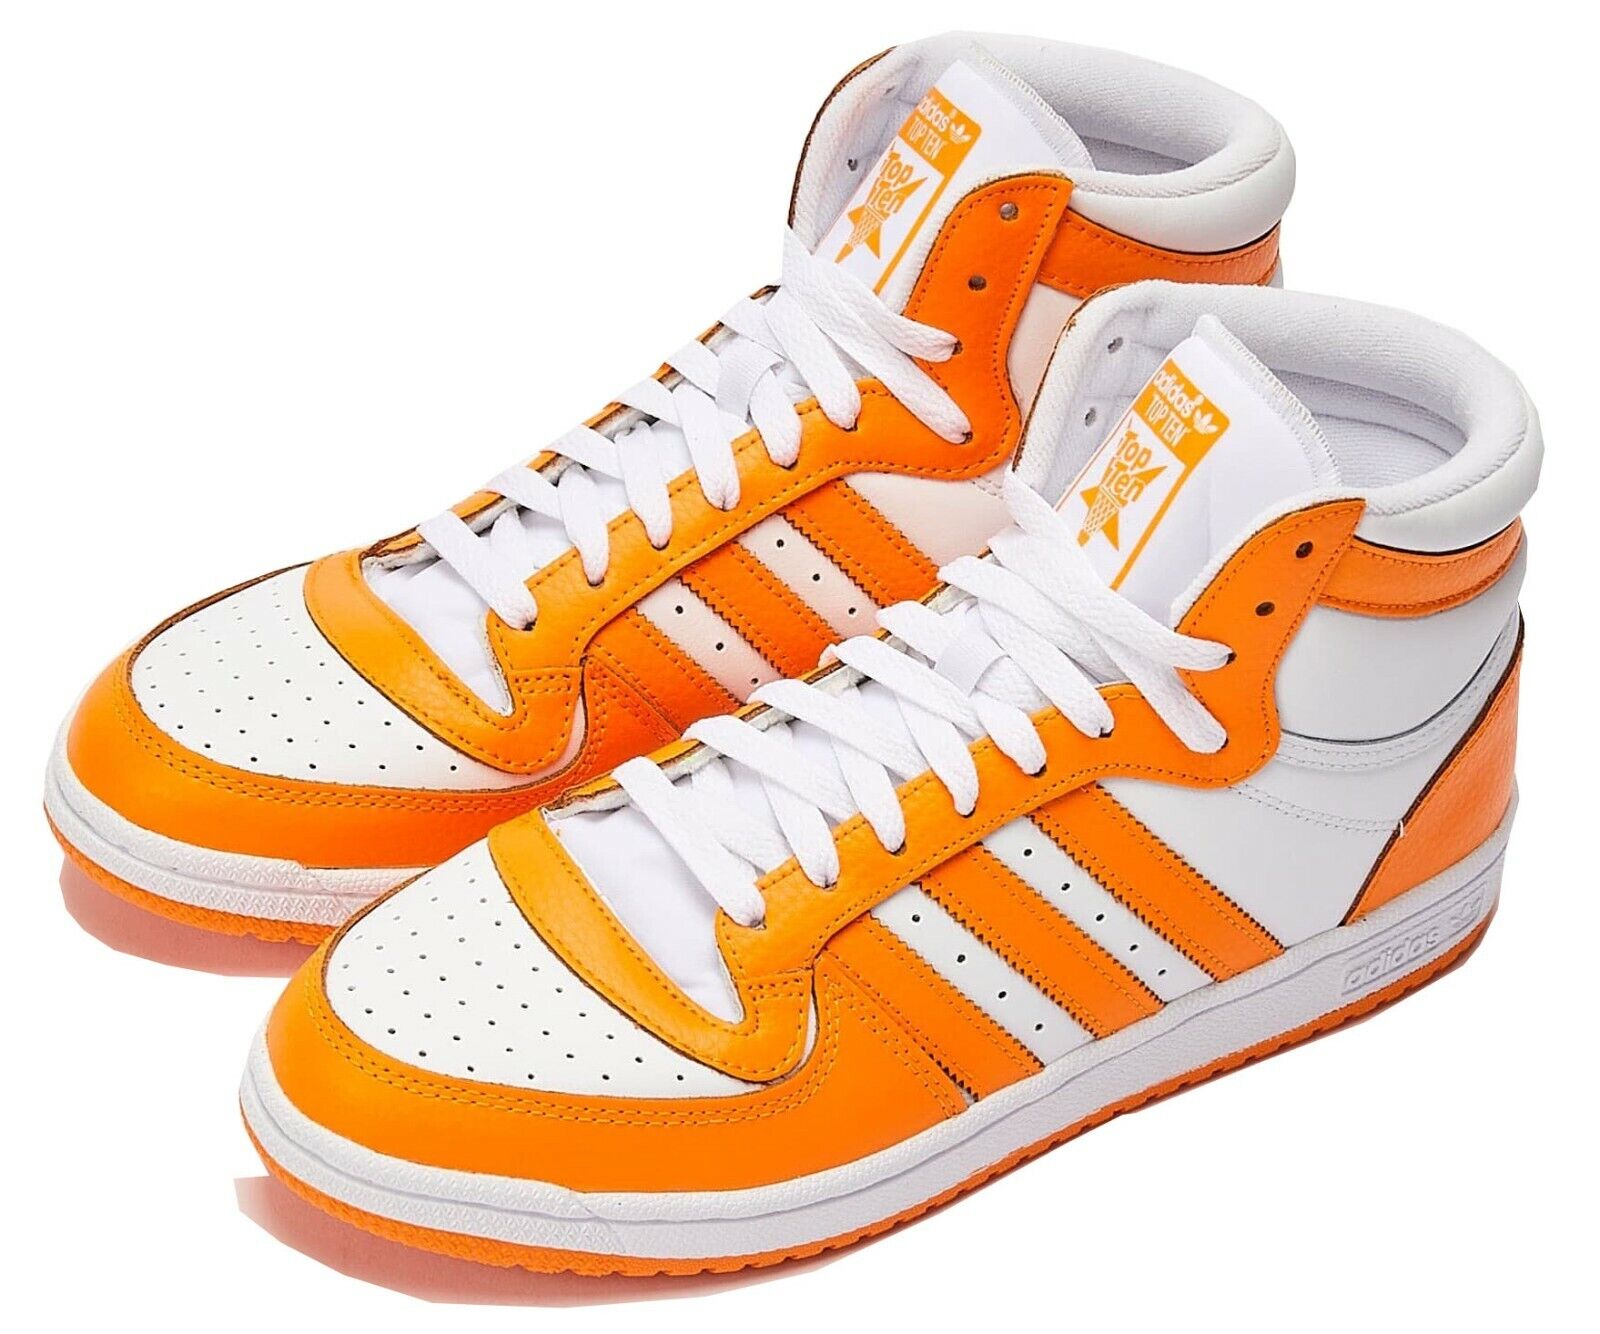 Prestige carpet operation New adidas Originals Top Ten Mens orange Leather Hi Top Athletic sneaker  all sz | eBay